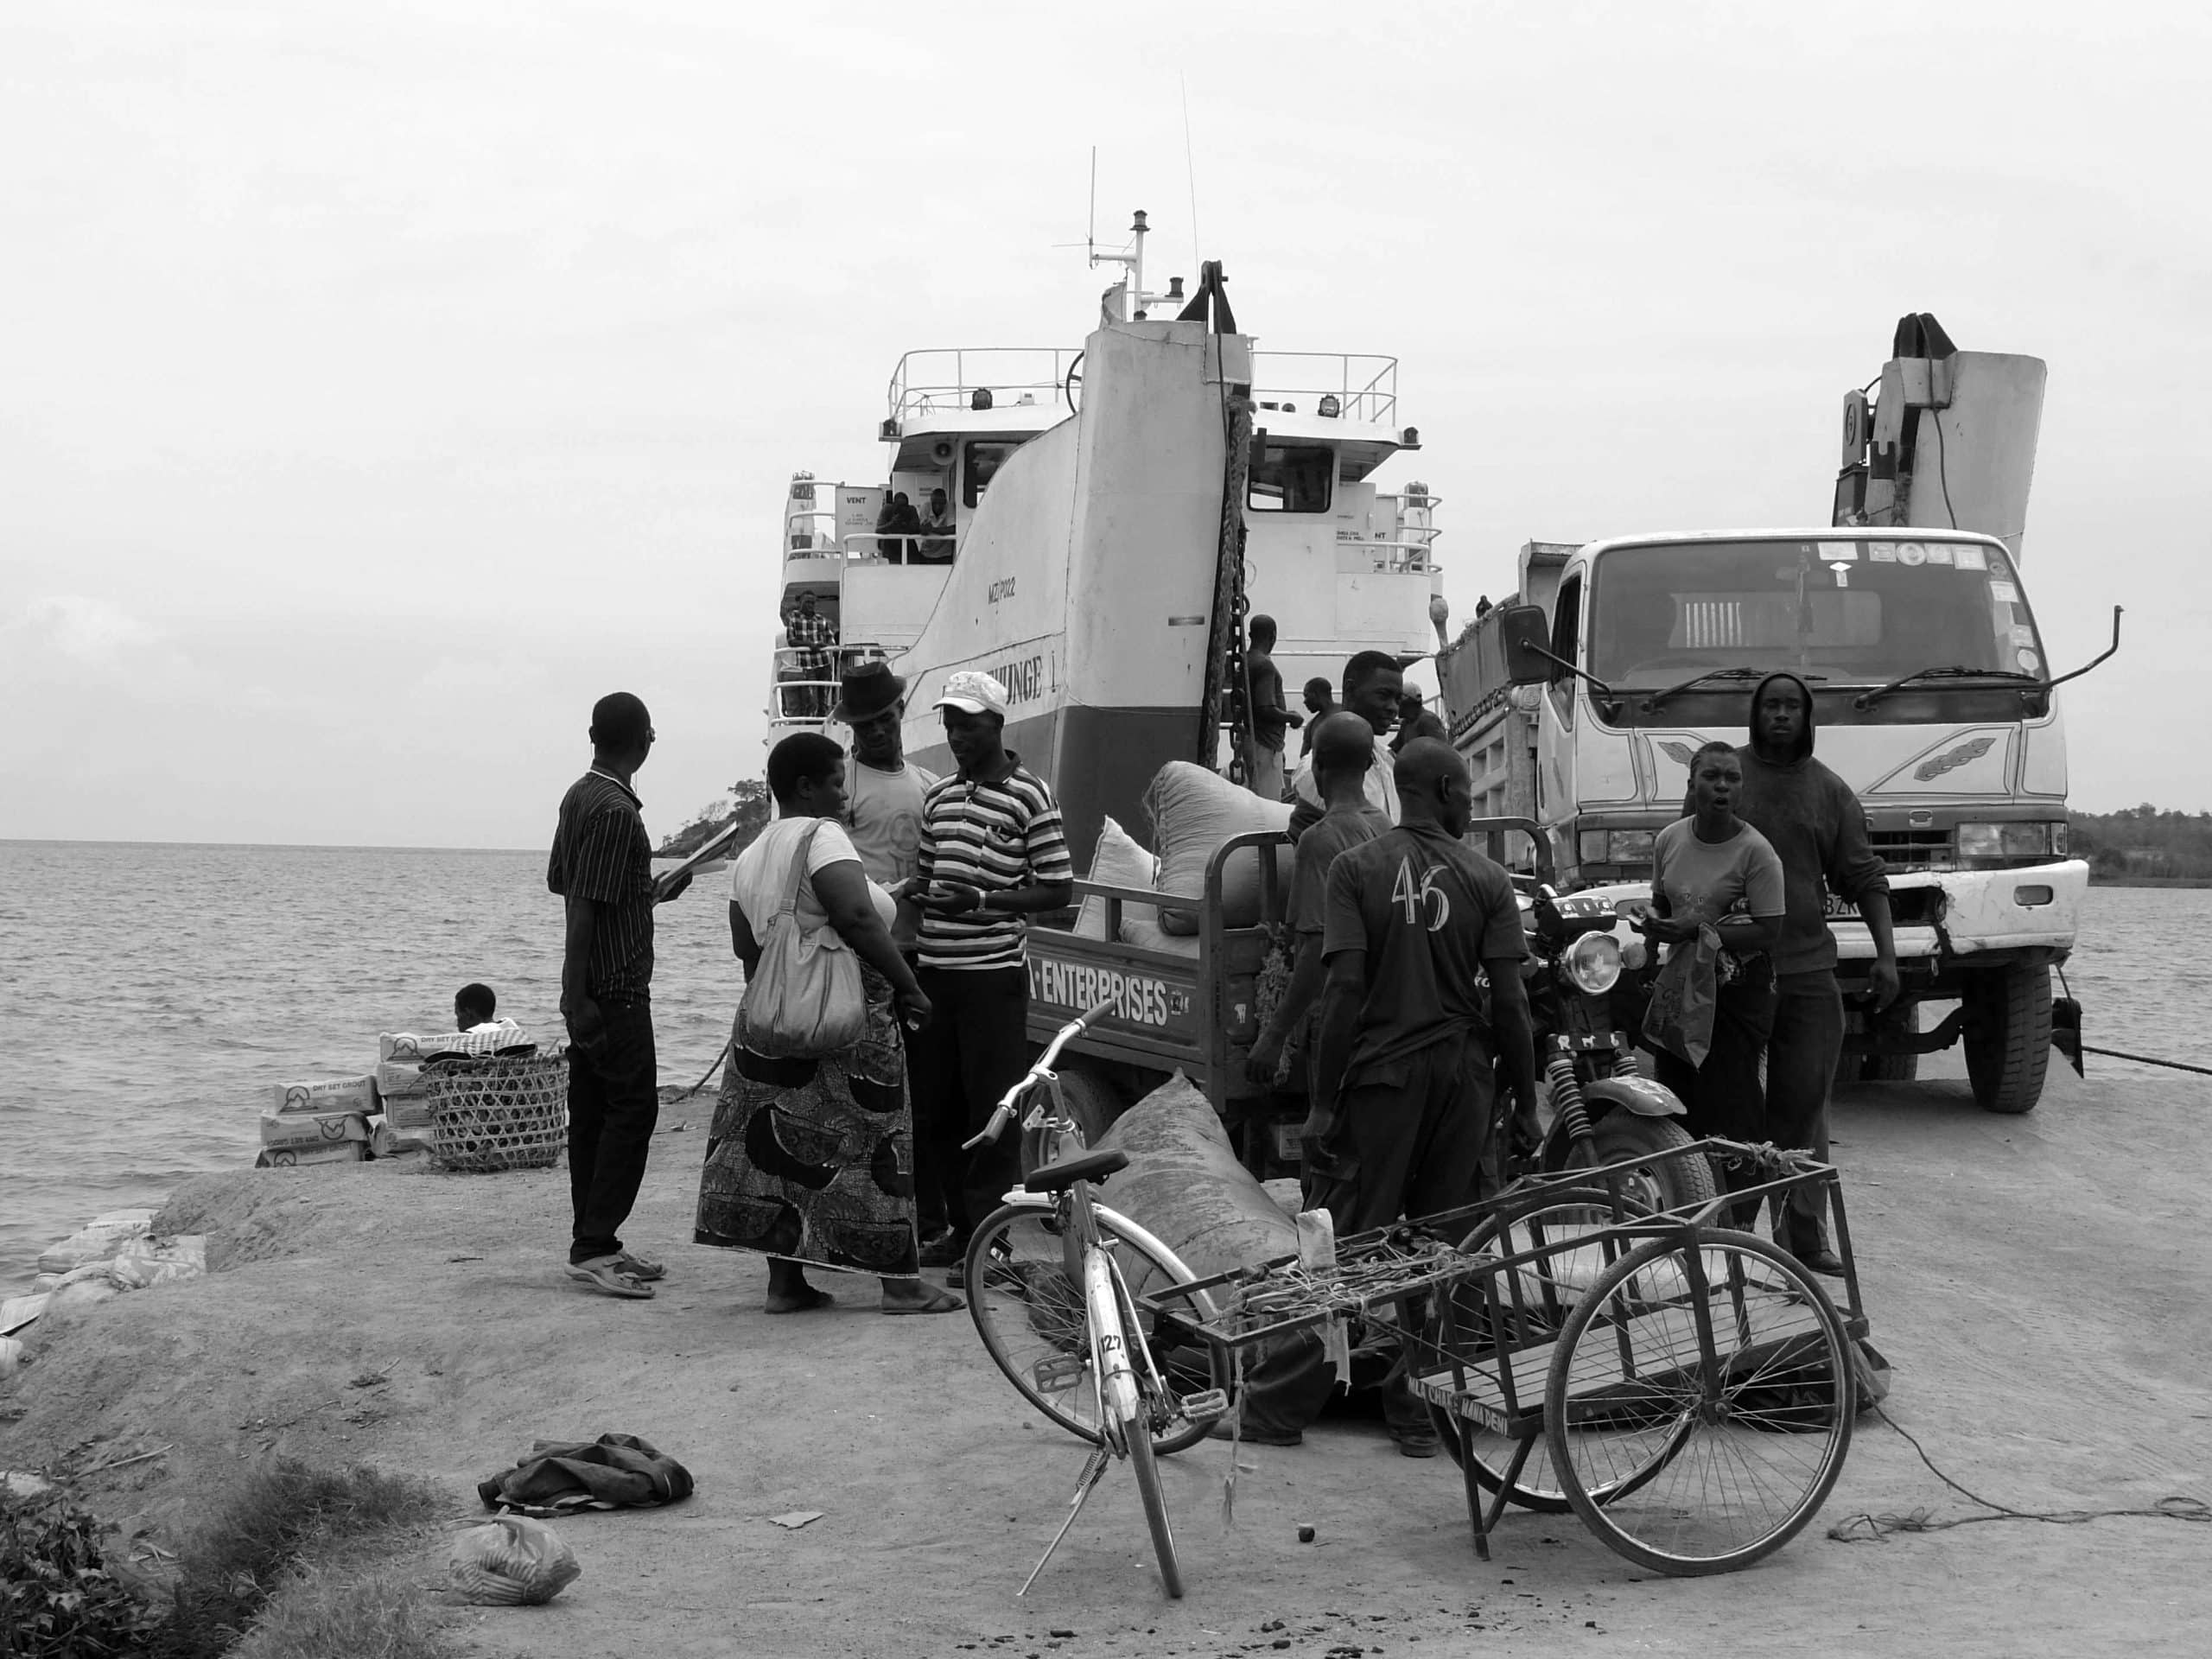 MV Nyehunge in the port of Nansio, Tanzania.